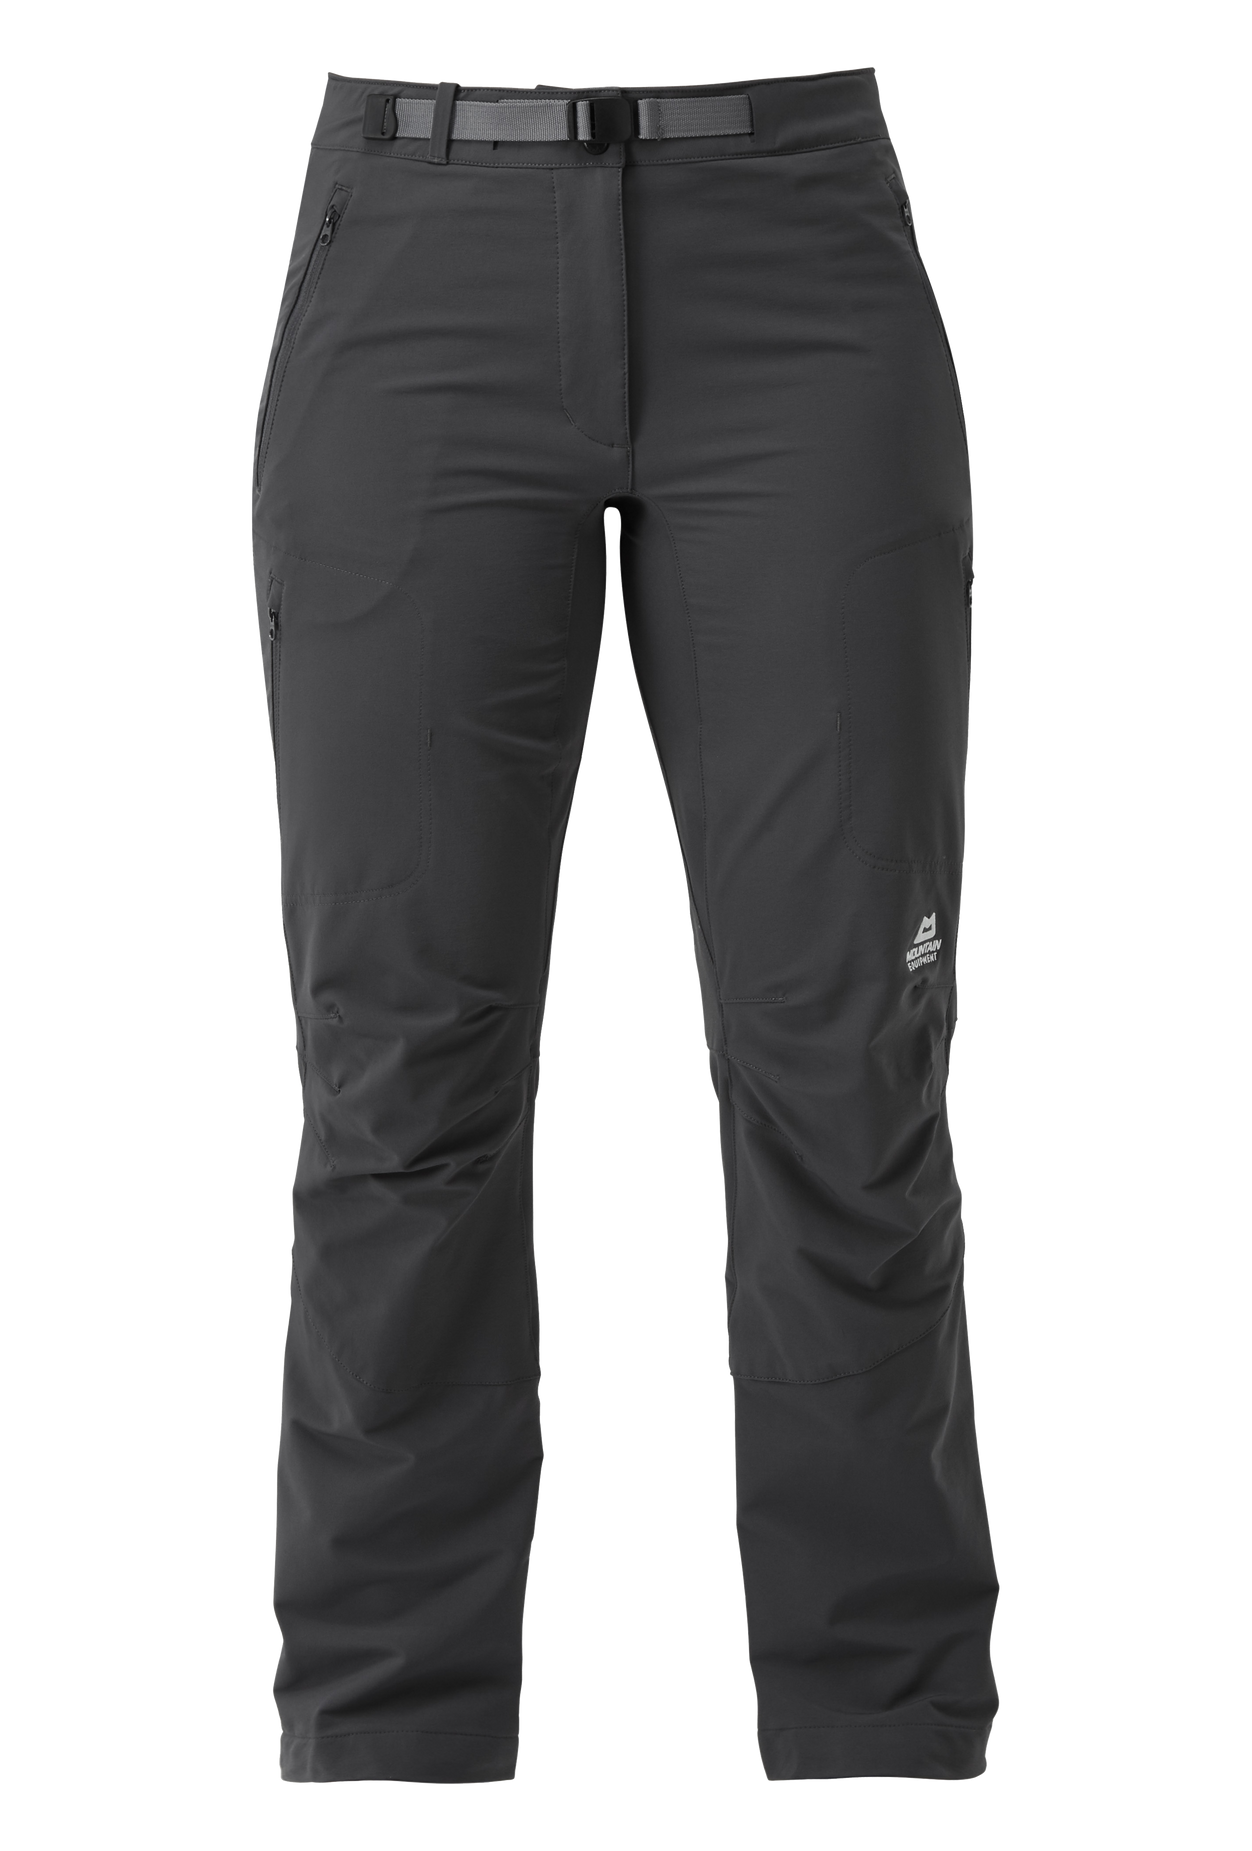 Mountain Equipment dámské softshellové kalhoty Chamois Wmns Pant Barva: Anvil Grey, Velikost: 10/S